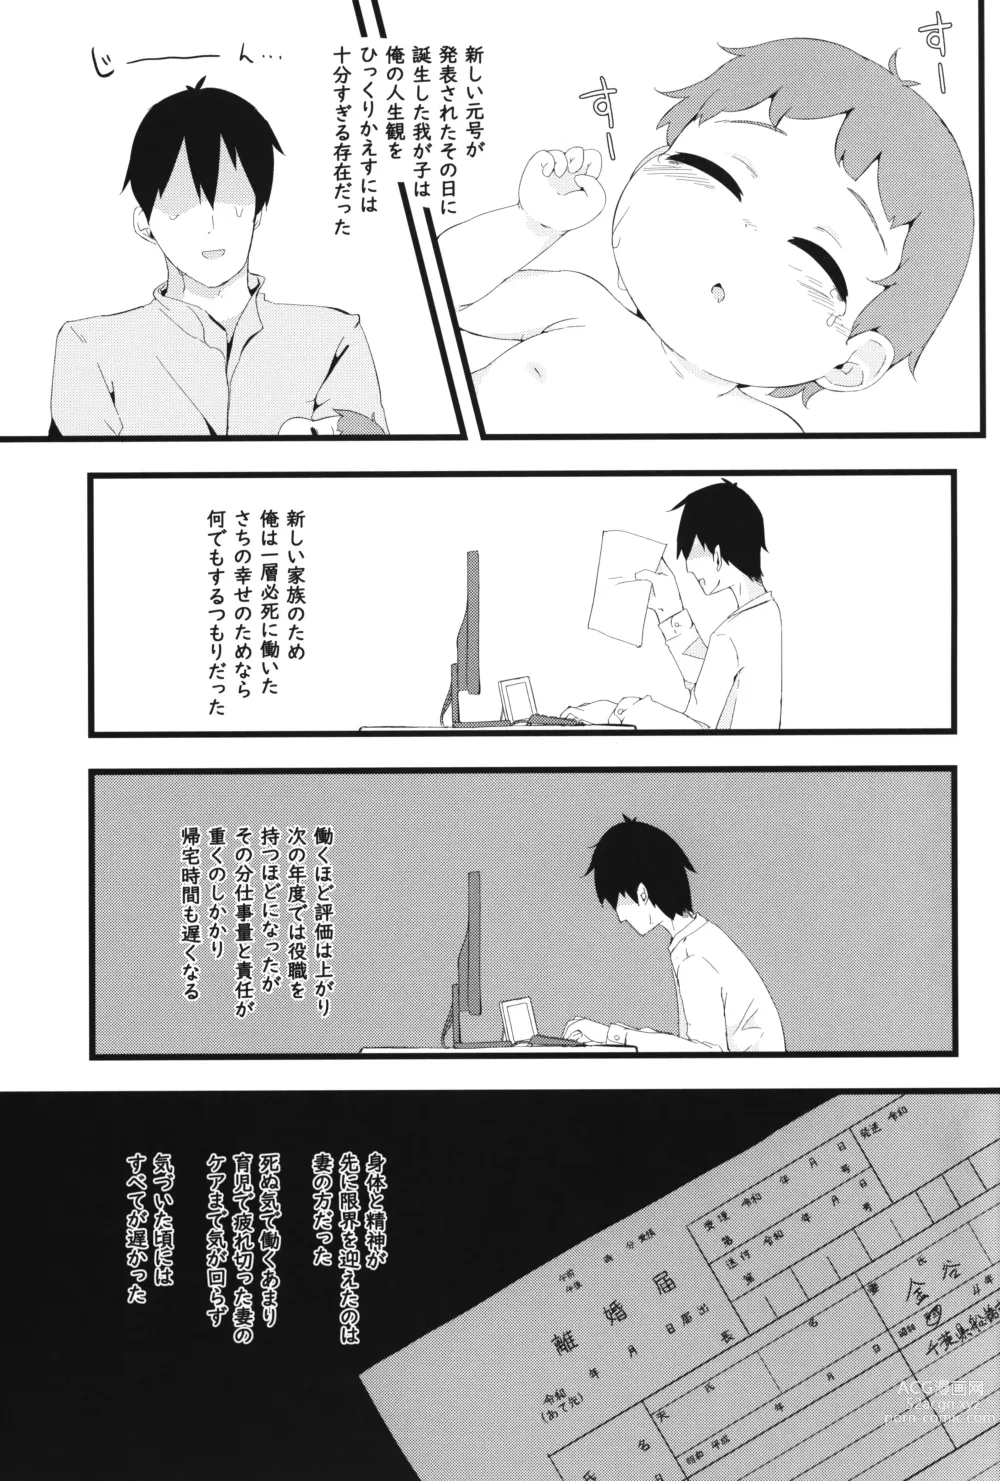 Page 6 of doujinshi Reiwa Umare